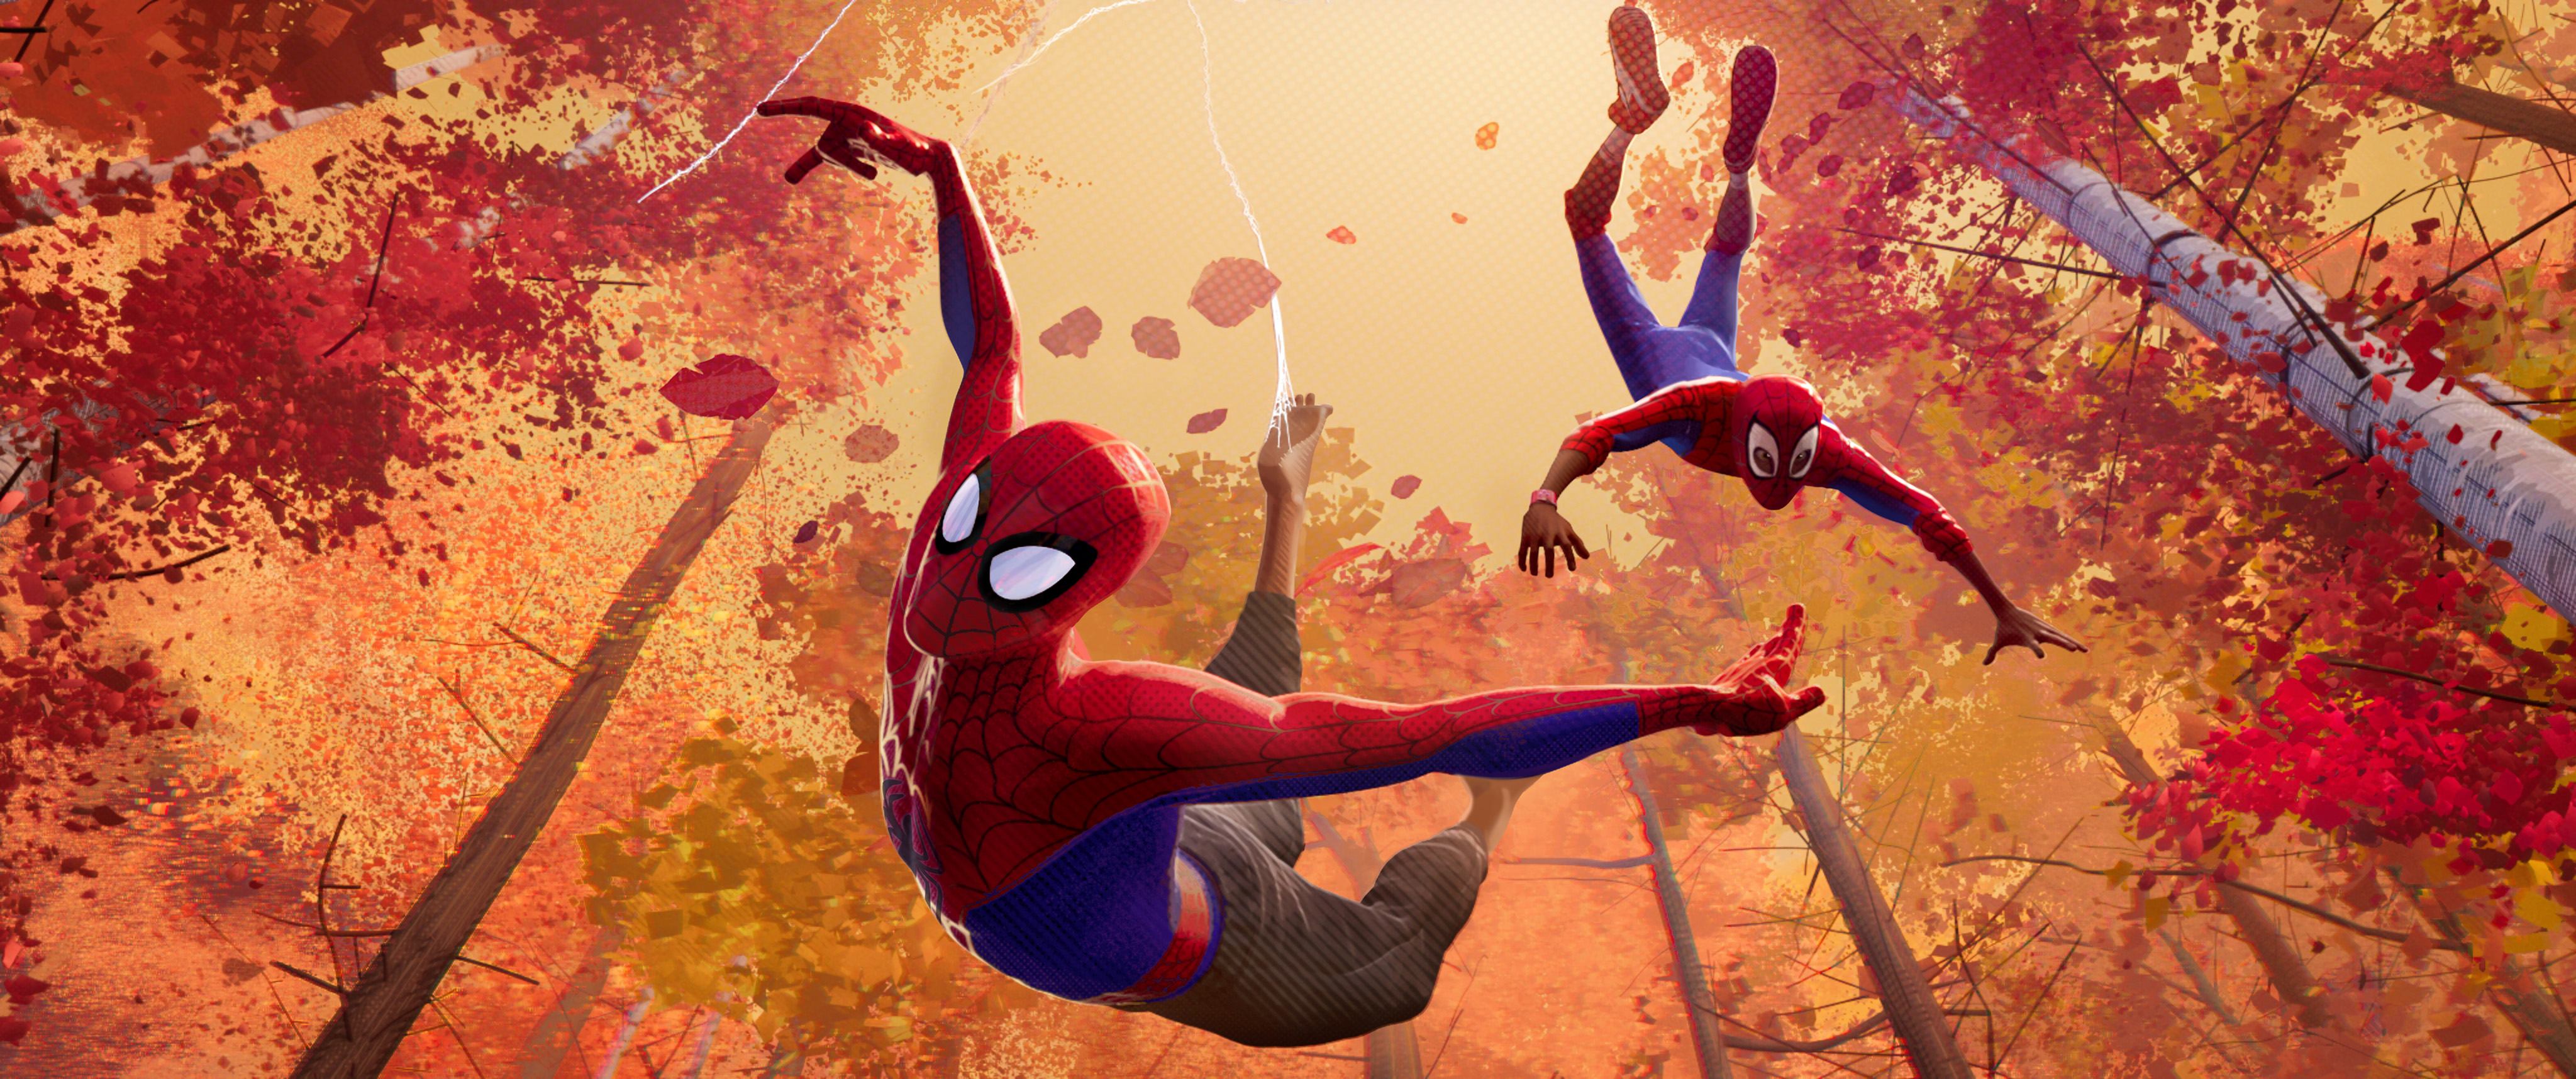 Spider-Man™: Into the Spider-Verse Gallery 18